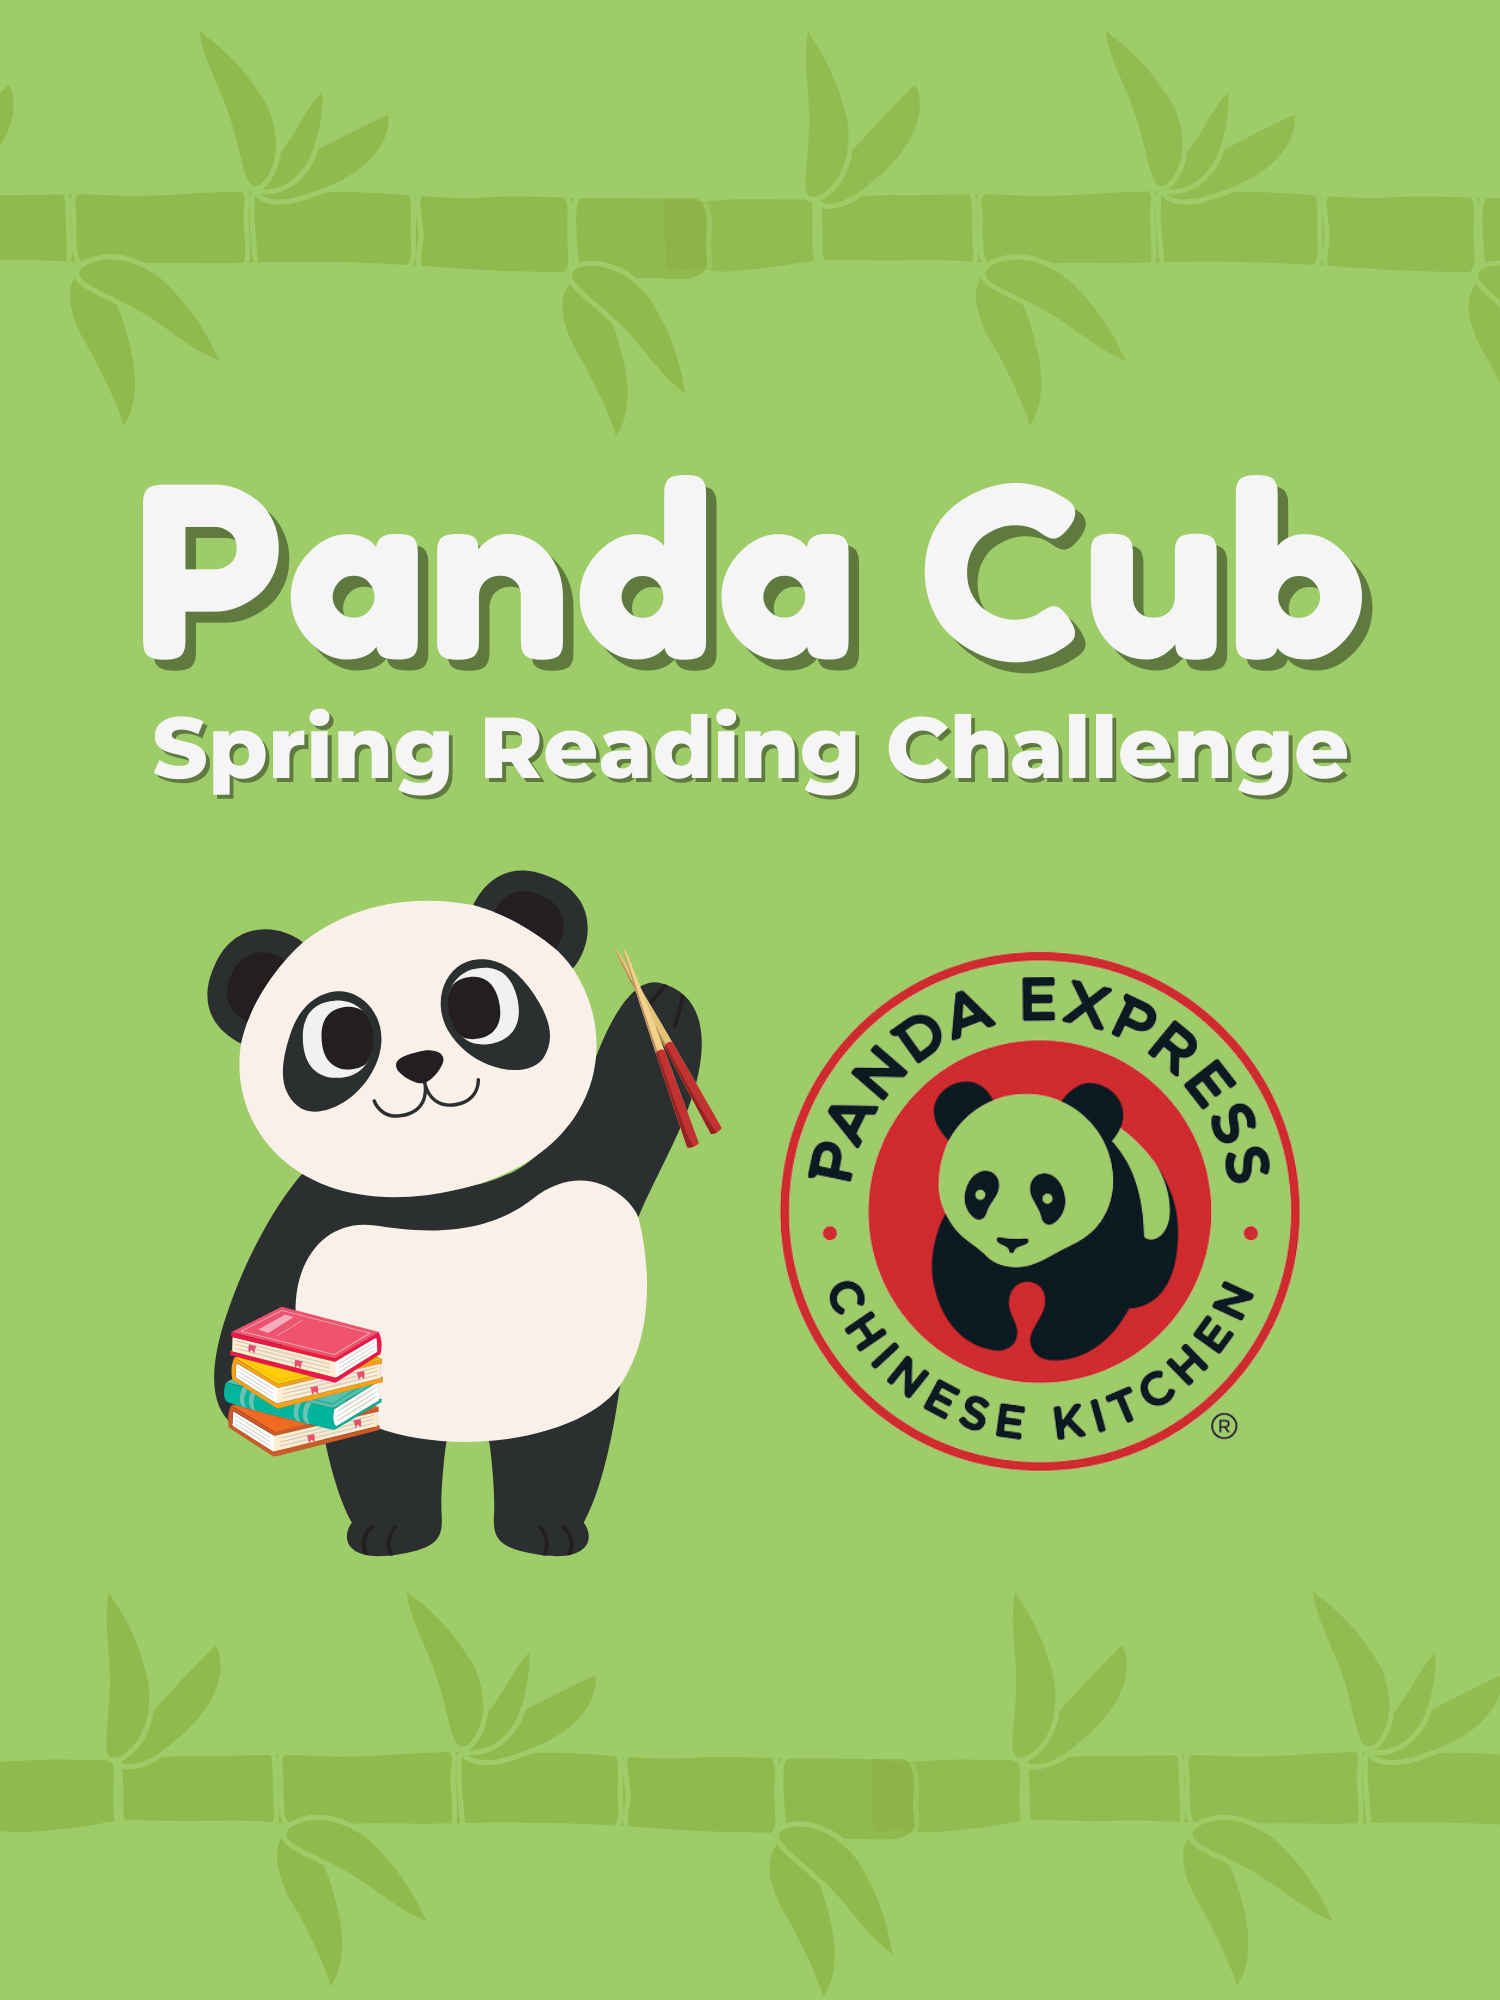 Panda Cub Spring Reading Challenge